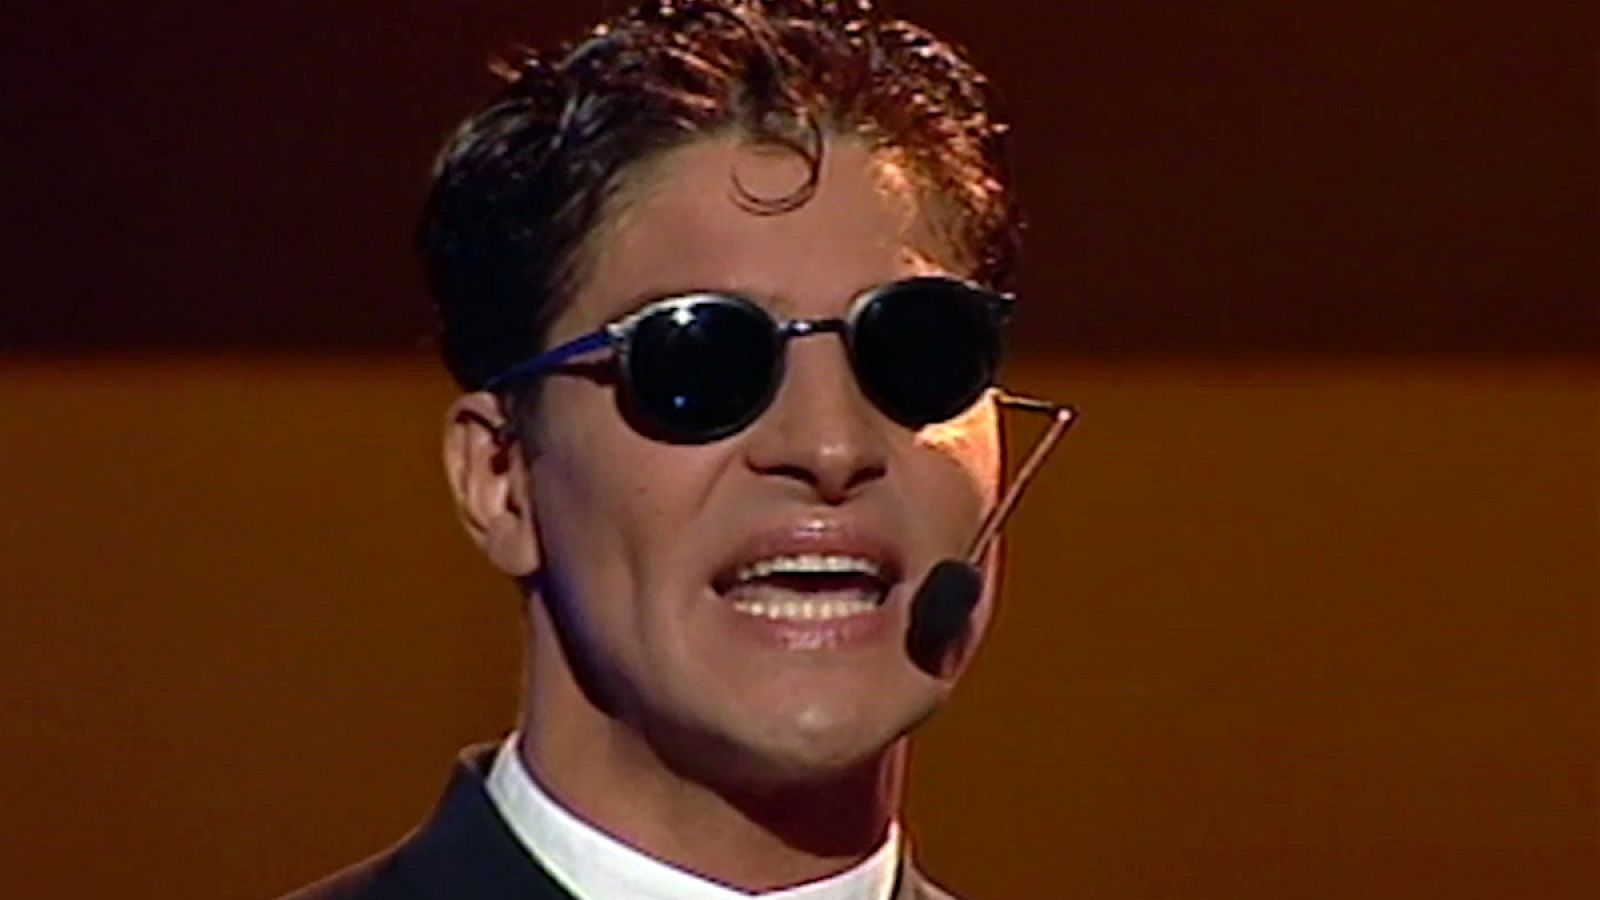 Festival de Eurovisión 2000 - Serafín Zubiri cantó "Colgado de un sueño"